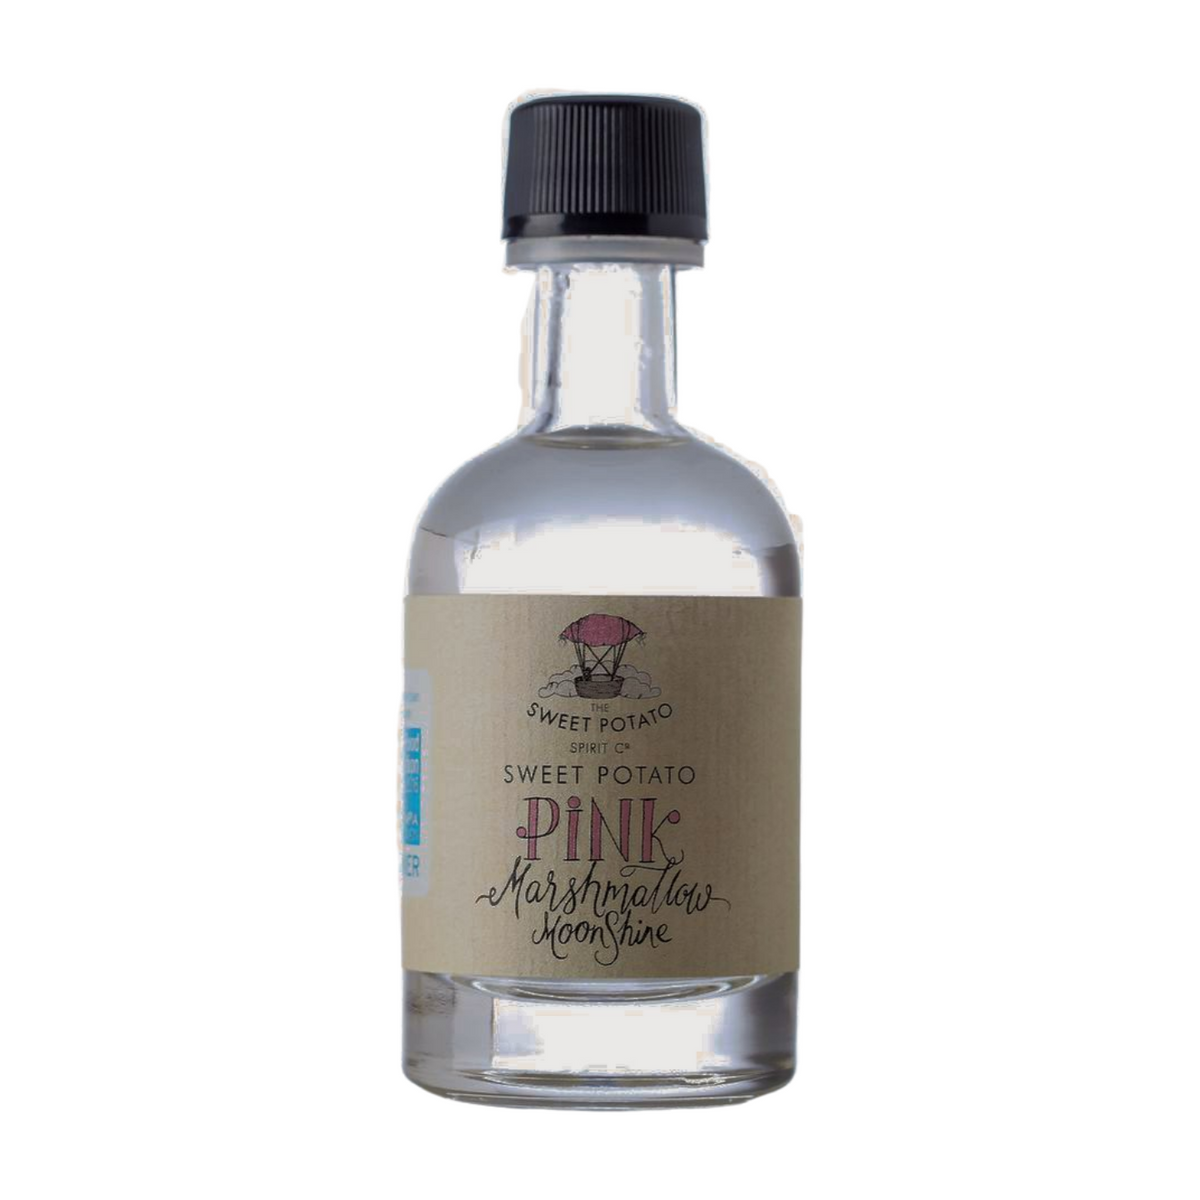 The Sweet Potato Spirit Co. Sweet Potato Pink Marshmallow Moonshine (1 ...